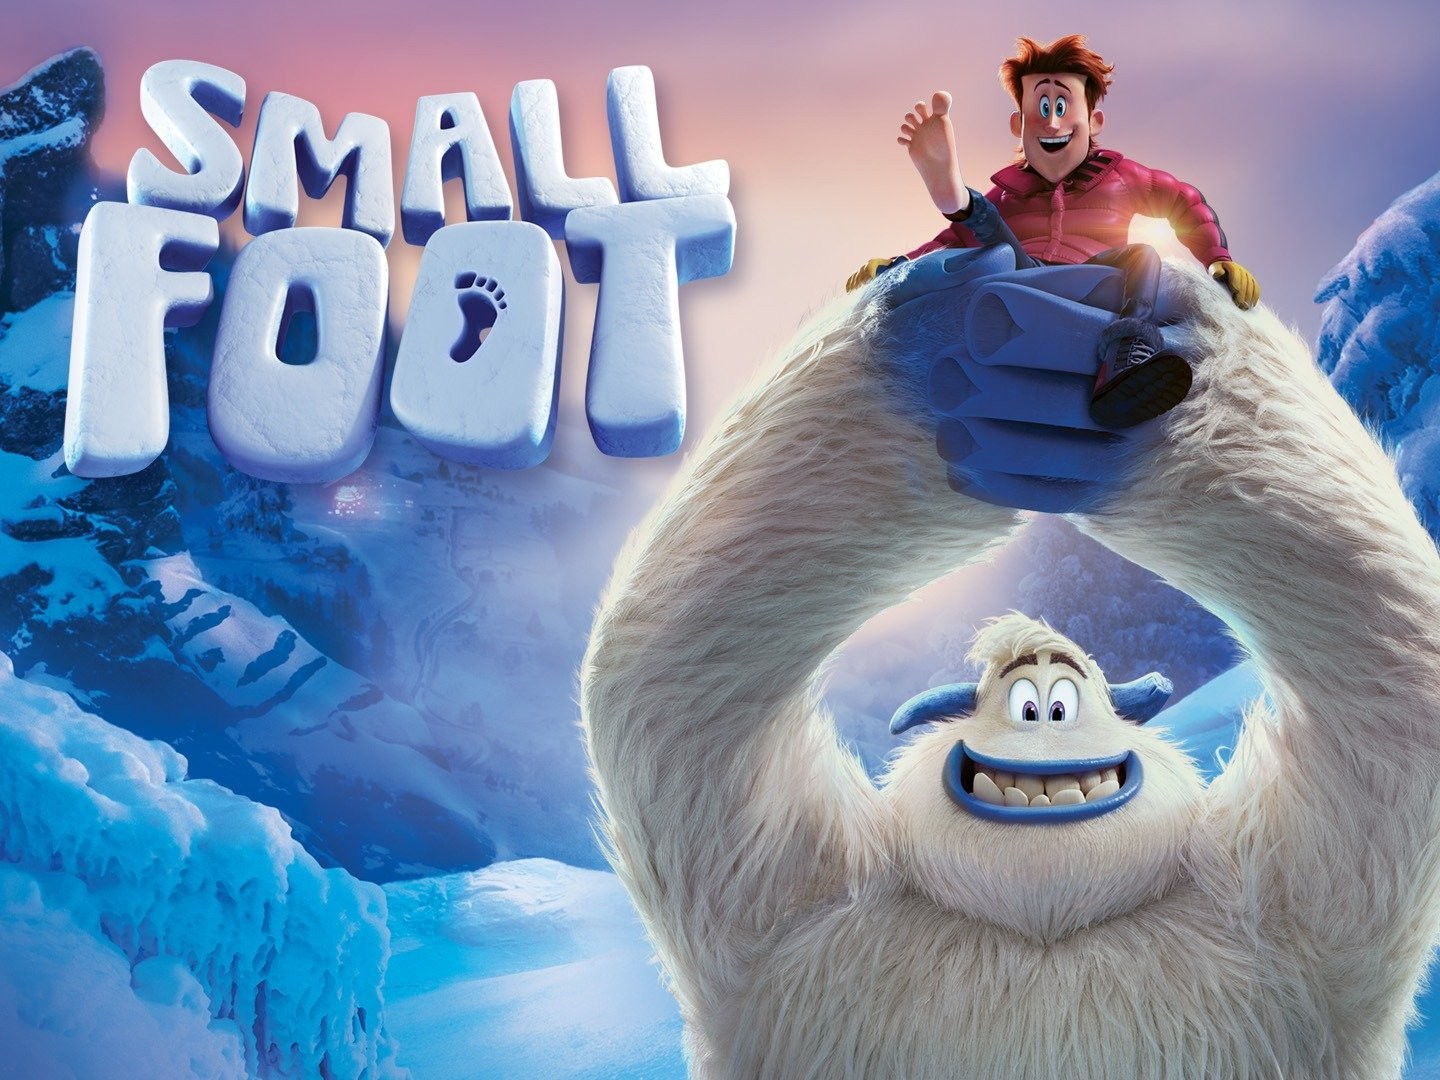 Smallfoot (film) - Wikipedia